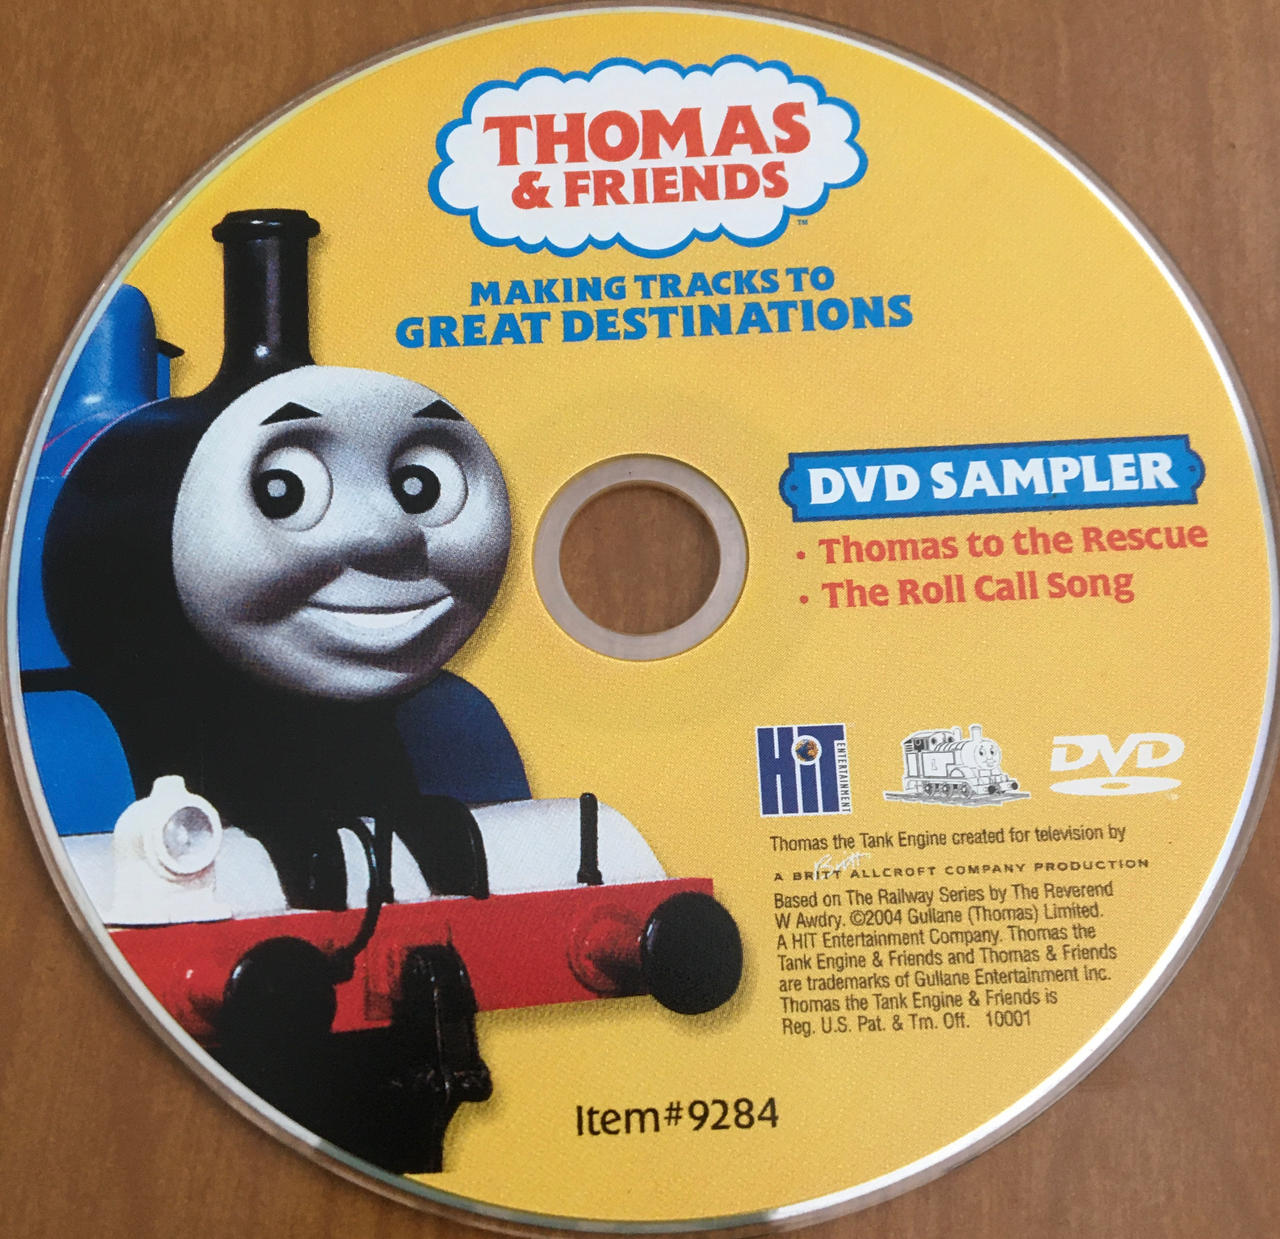 Thomas and Friends DVD Sampler (2004) by MaksKochanowicz123 on